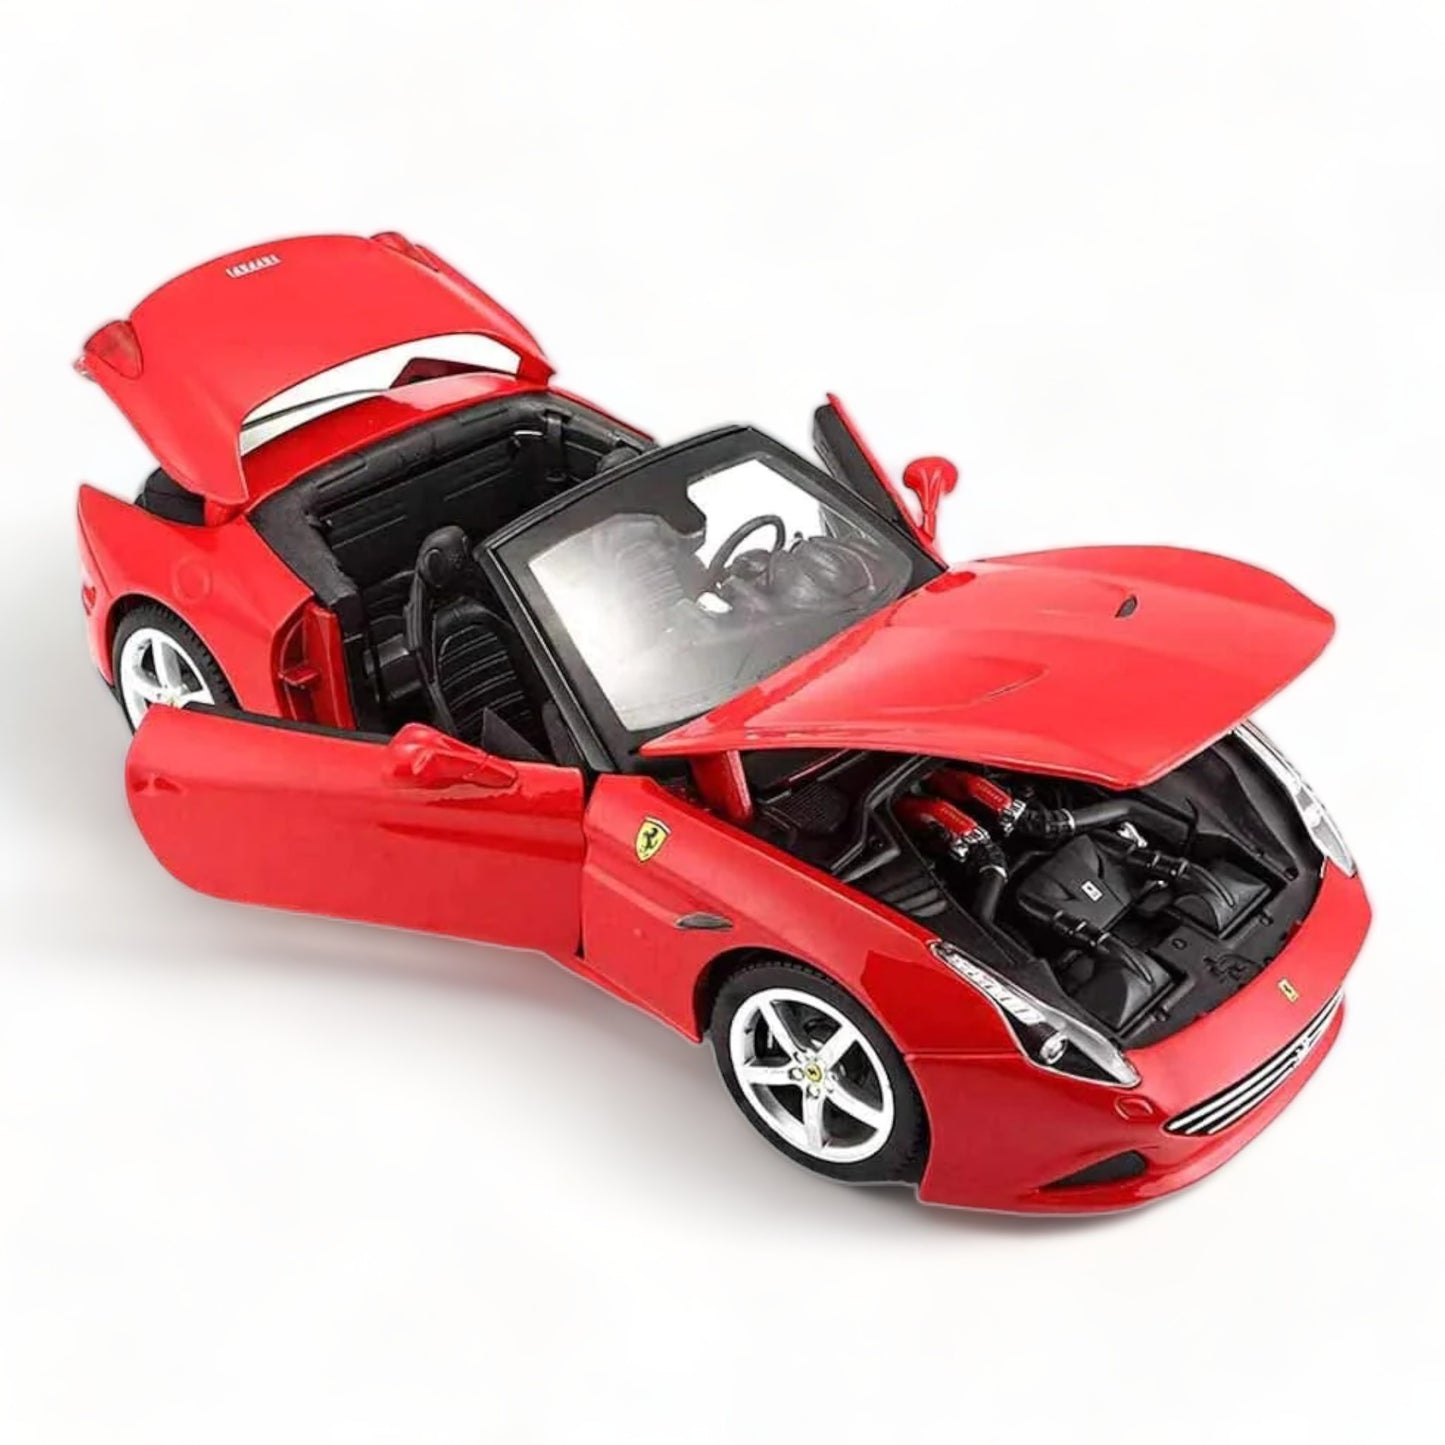 1/18 Diecast Ferrari California T Open Top Red Bburago Scale Model Car